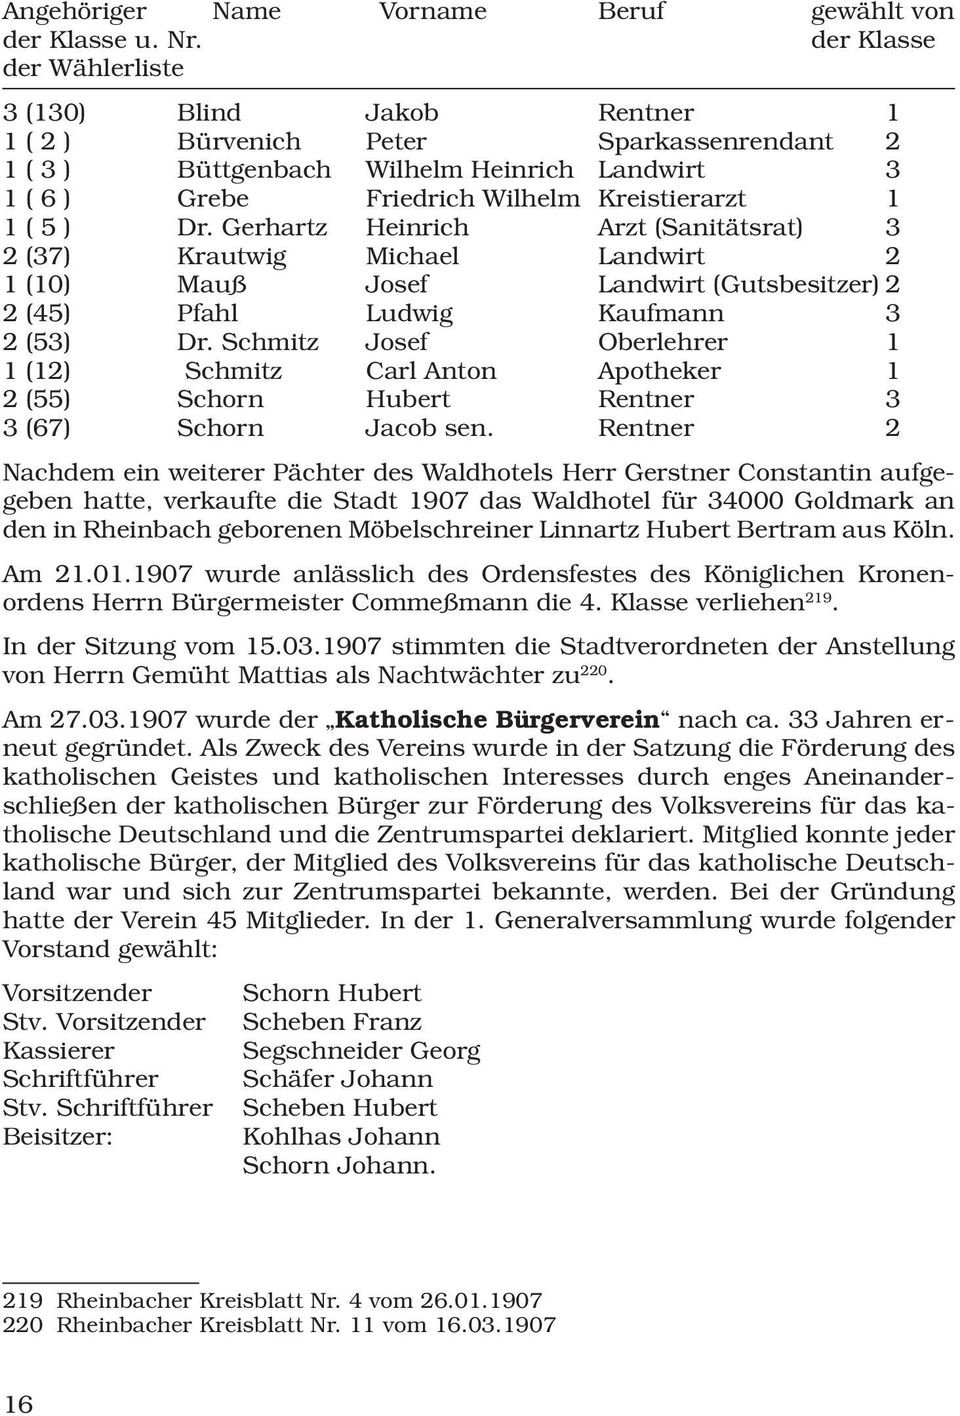 ( 5 ) Dr. Gerhartz Heinrich Arzt (Sanitätsrat) 3 2 (37) Krautwig Michael Landwirt 2 1 (10) Mauß Josef Landwirt (Gutsbesitzer) 2 2 (45) Pfahl Ludwig Kaufmann 3 2 (53) Dr.